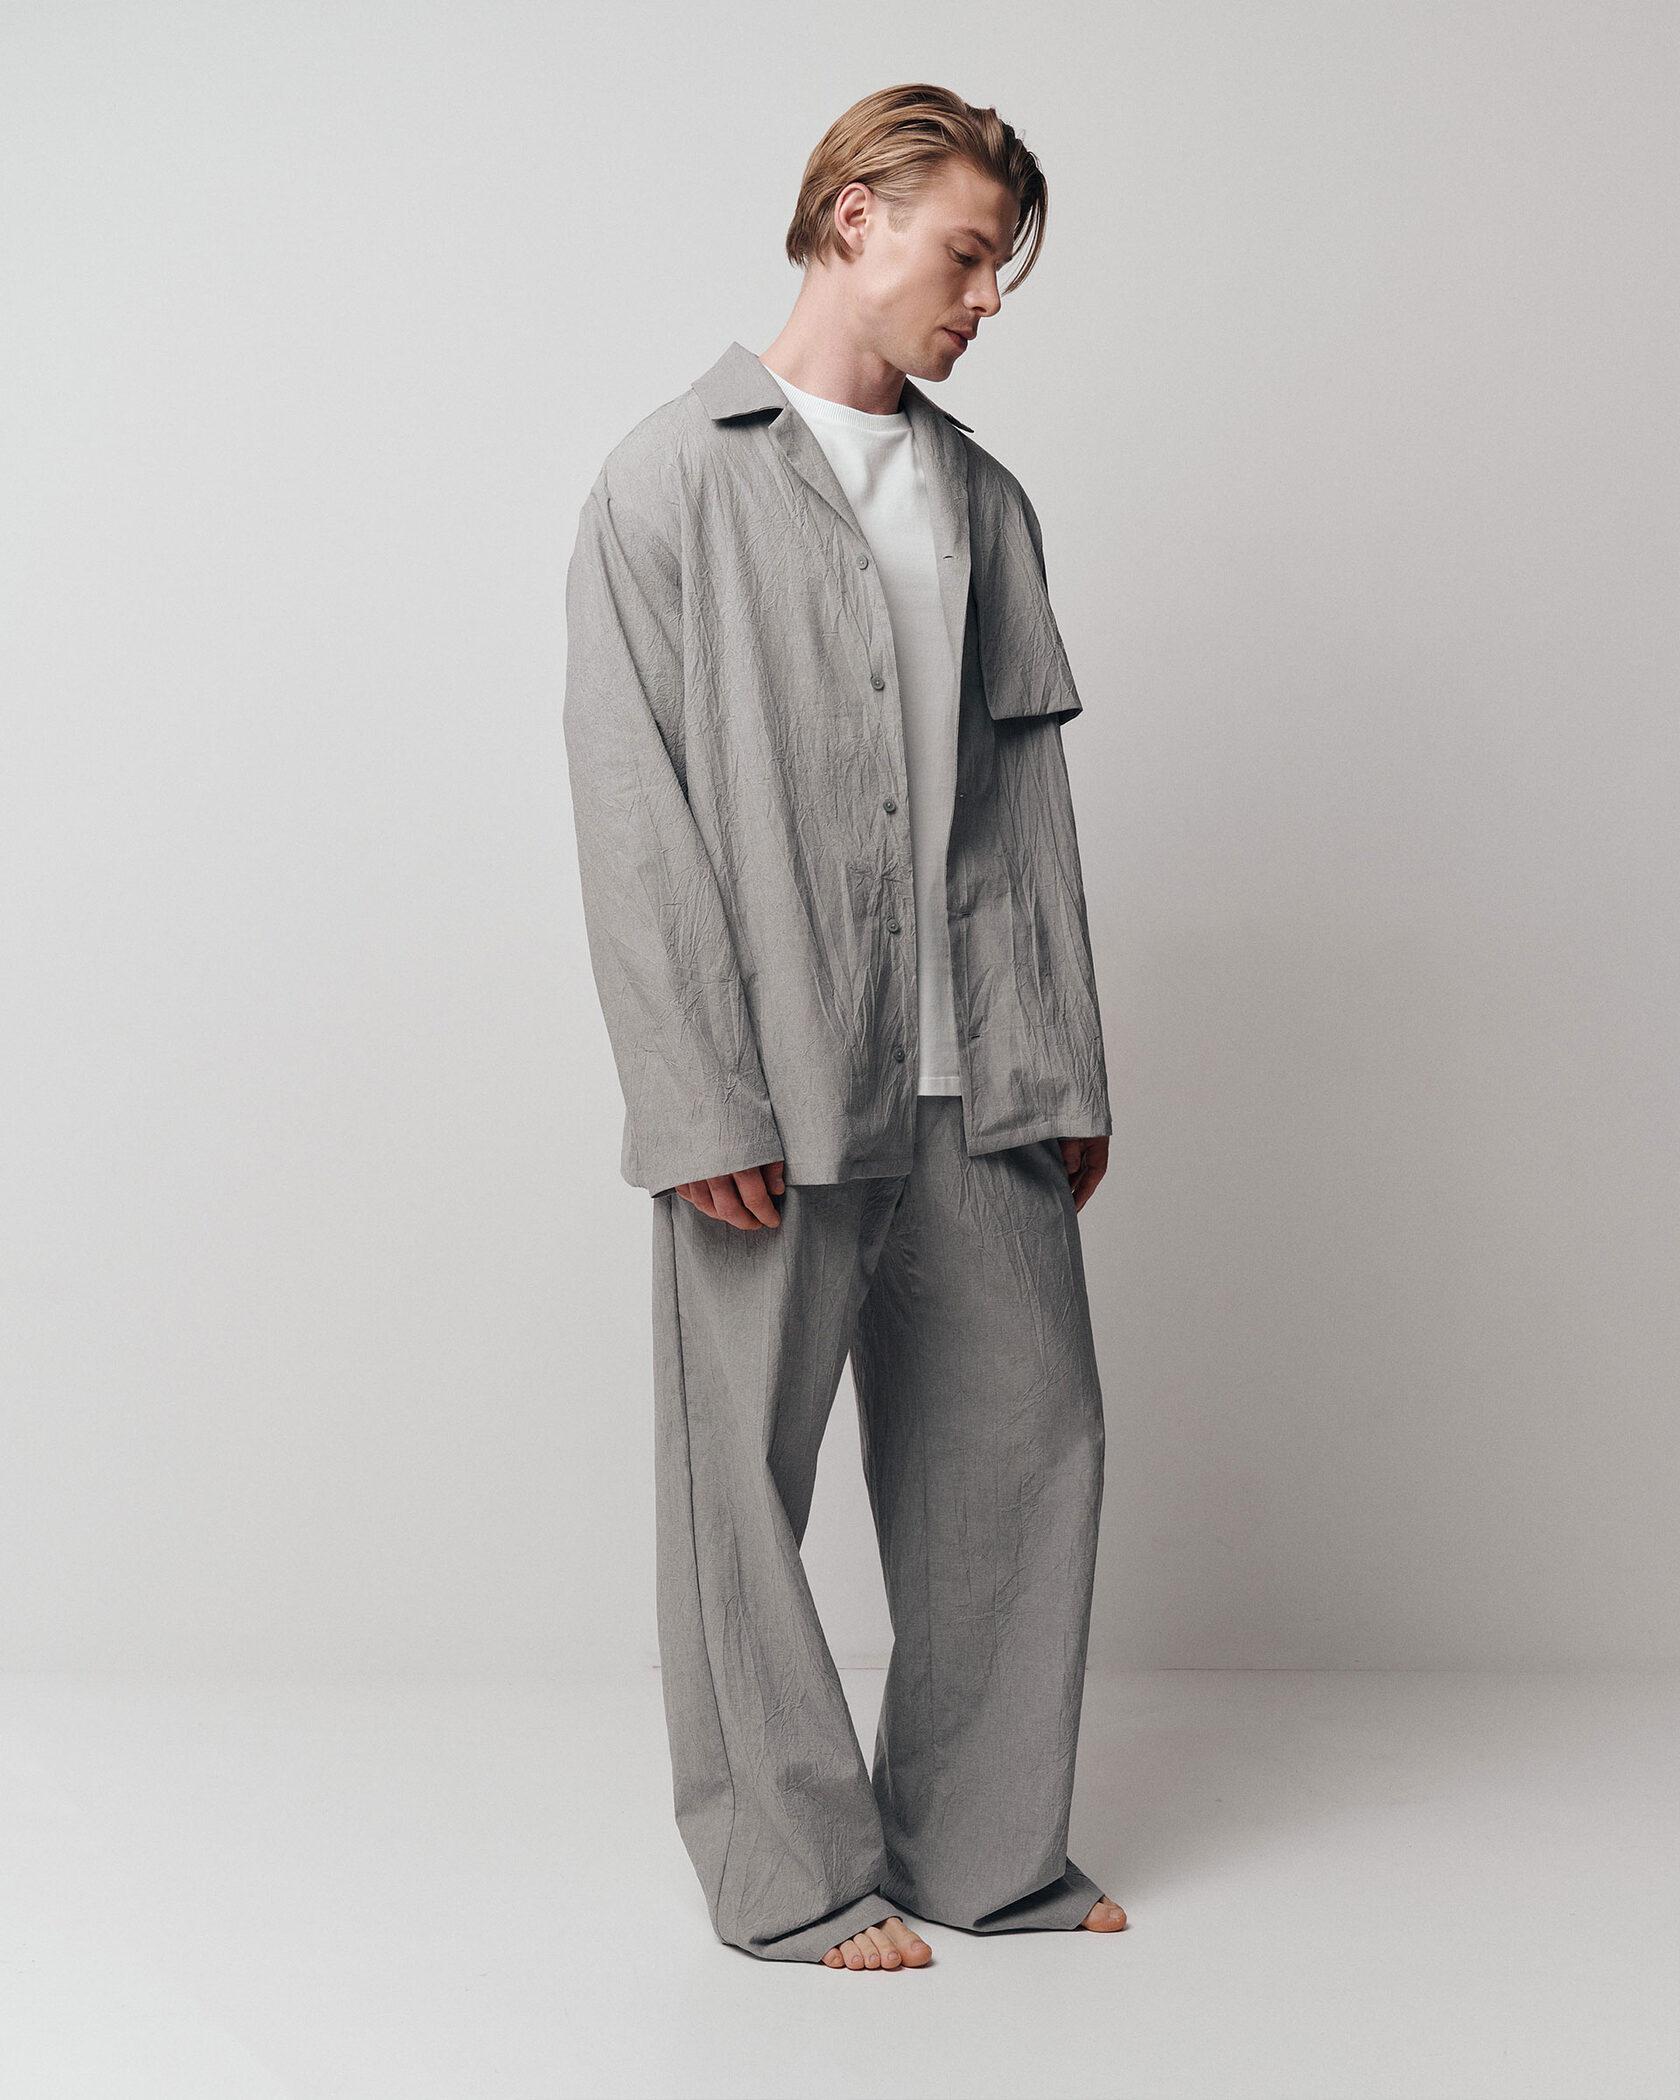 Pajama shirt (RUB 12,990), pajama pants (RUB 12,590) —  SERGACHEVxLVG, LVG (lovegoods.store)